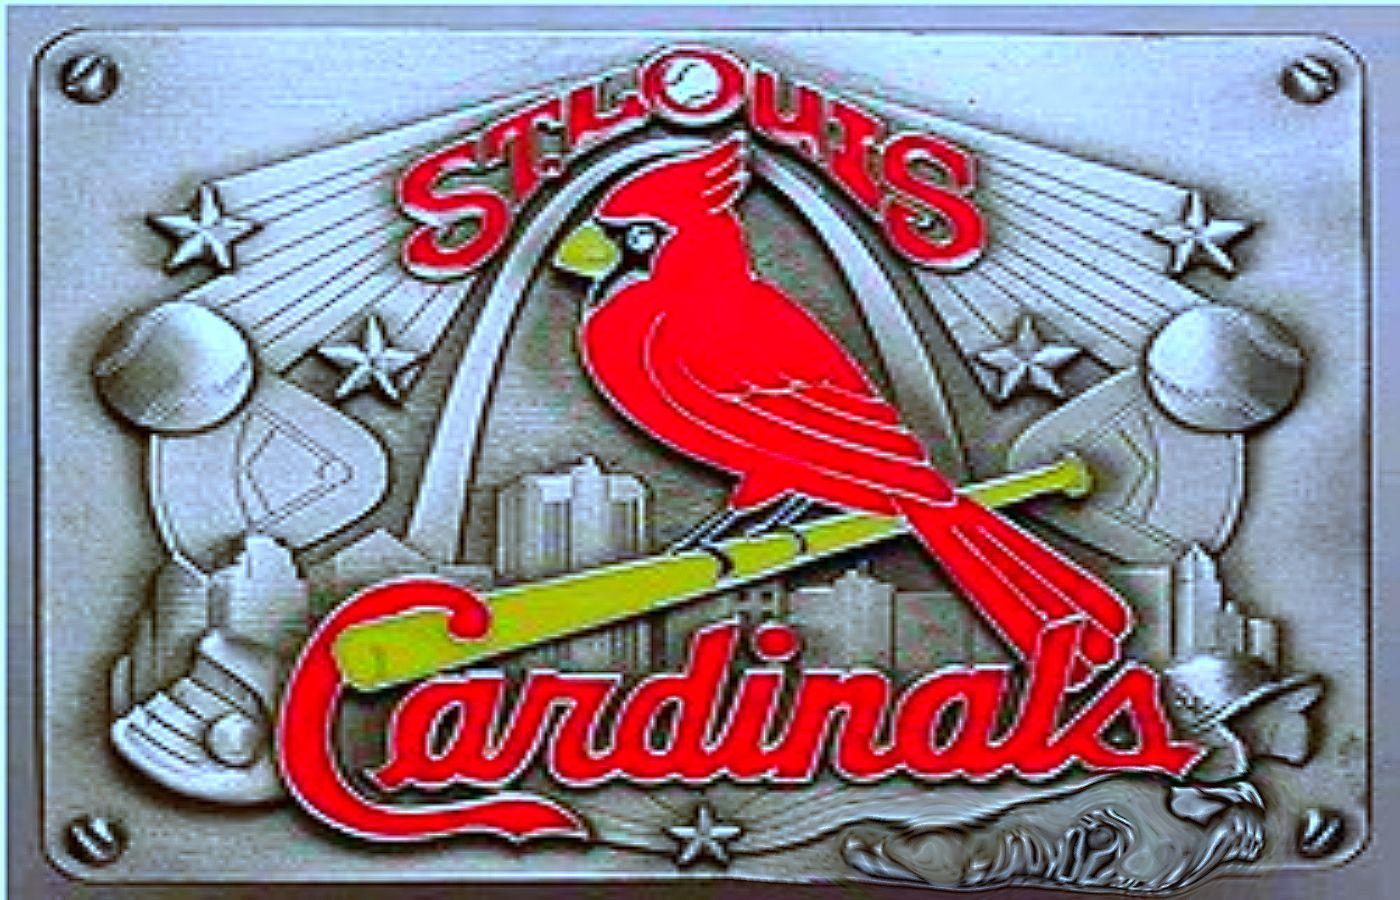 St Louis Cardinals Desktop Wallpapers - Wallpaper Cave